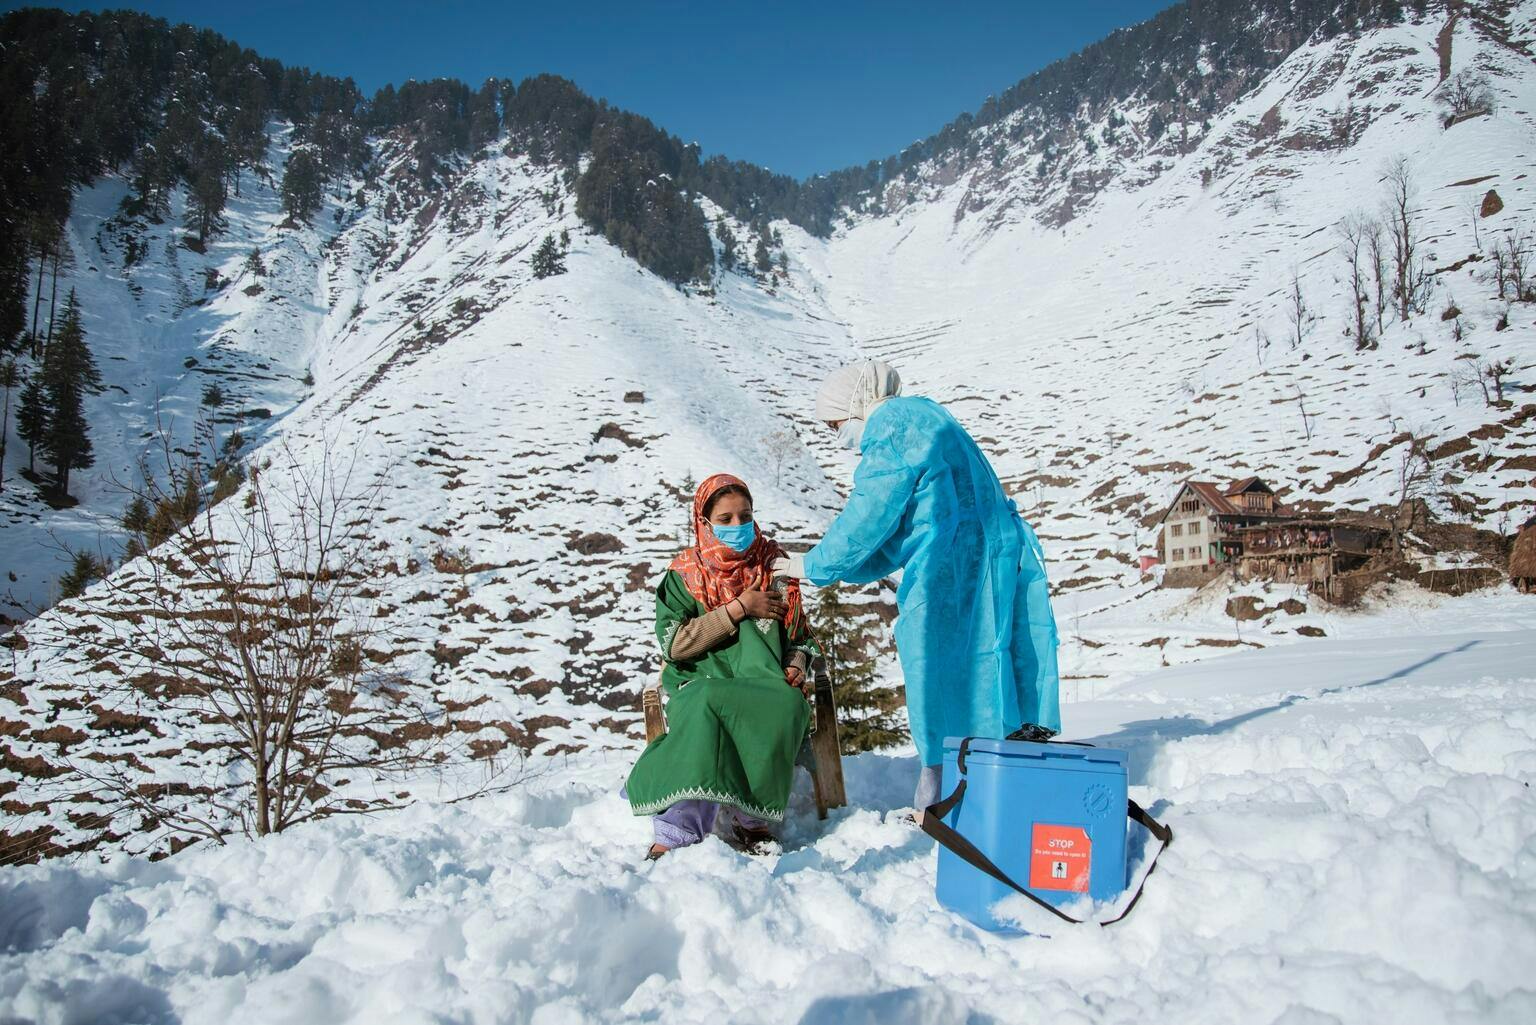 Vaccin i snön - kylkedjan - Indien 2021